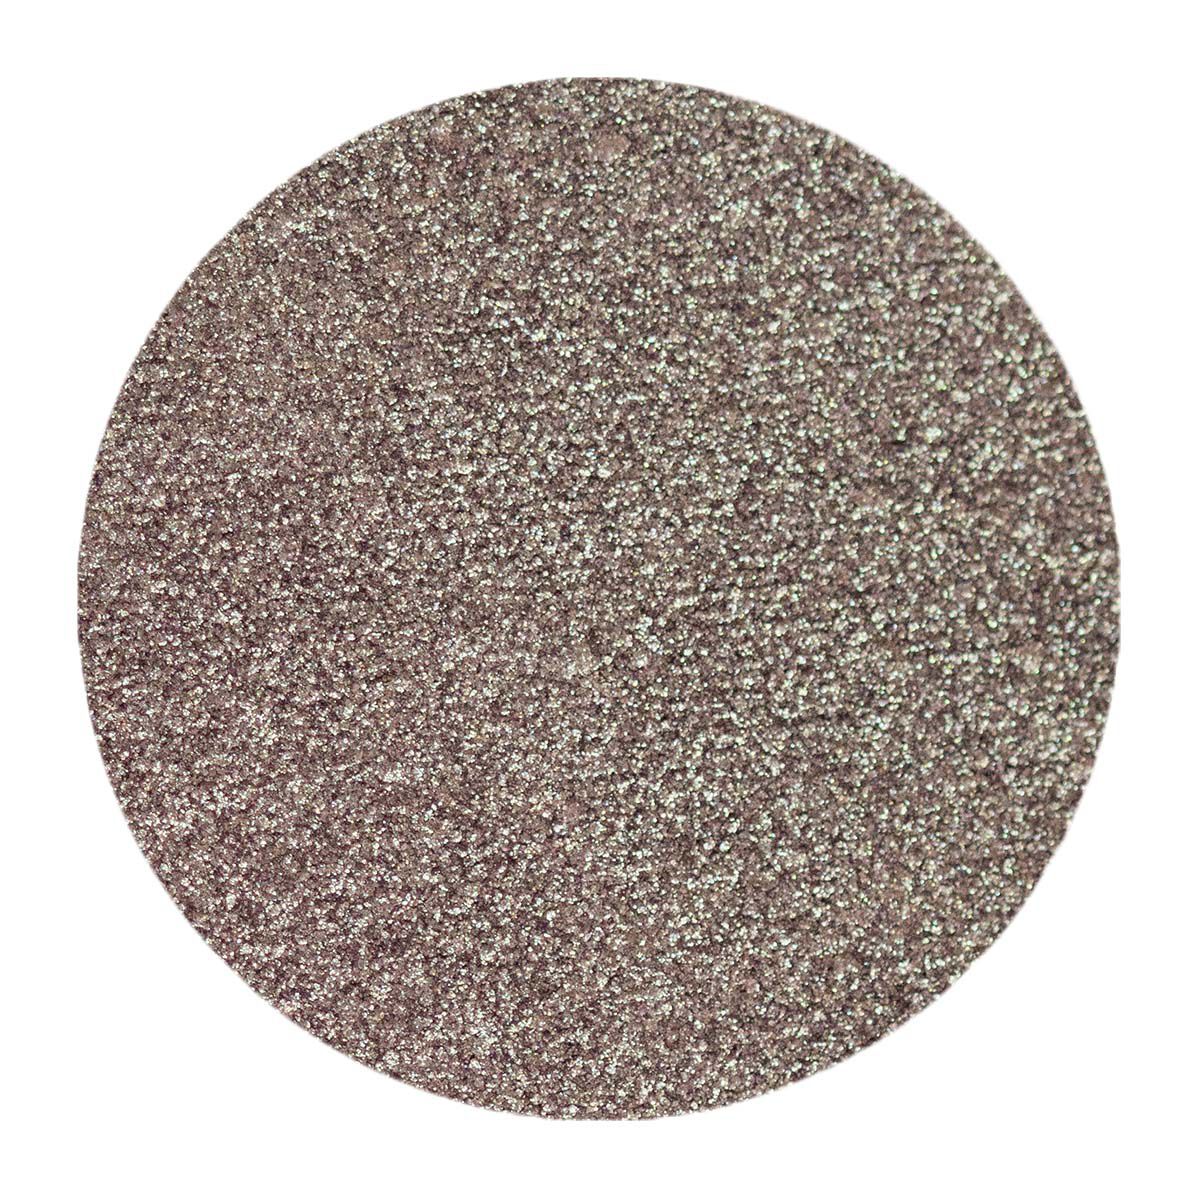 Сменный блок: тени для век red grass pearl Glam Shop, 1,8 гр